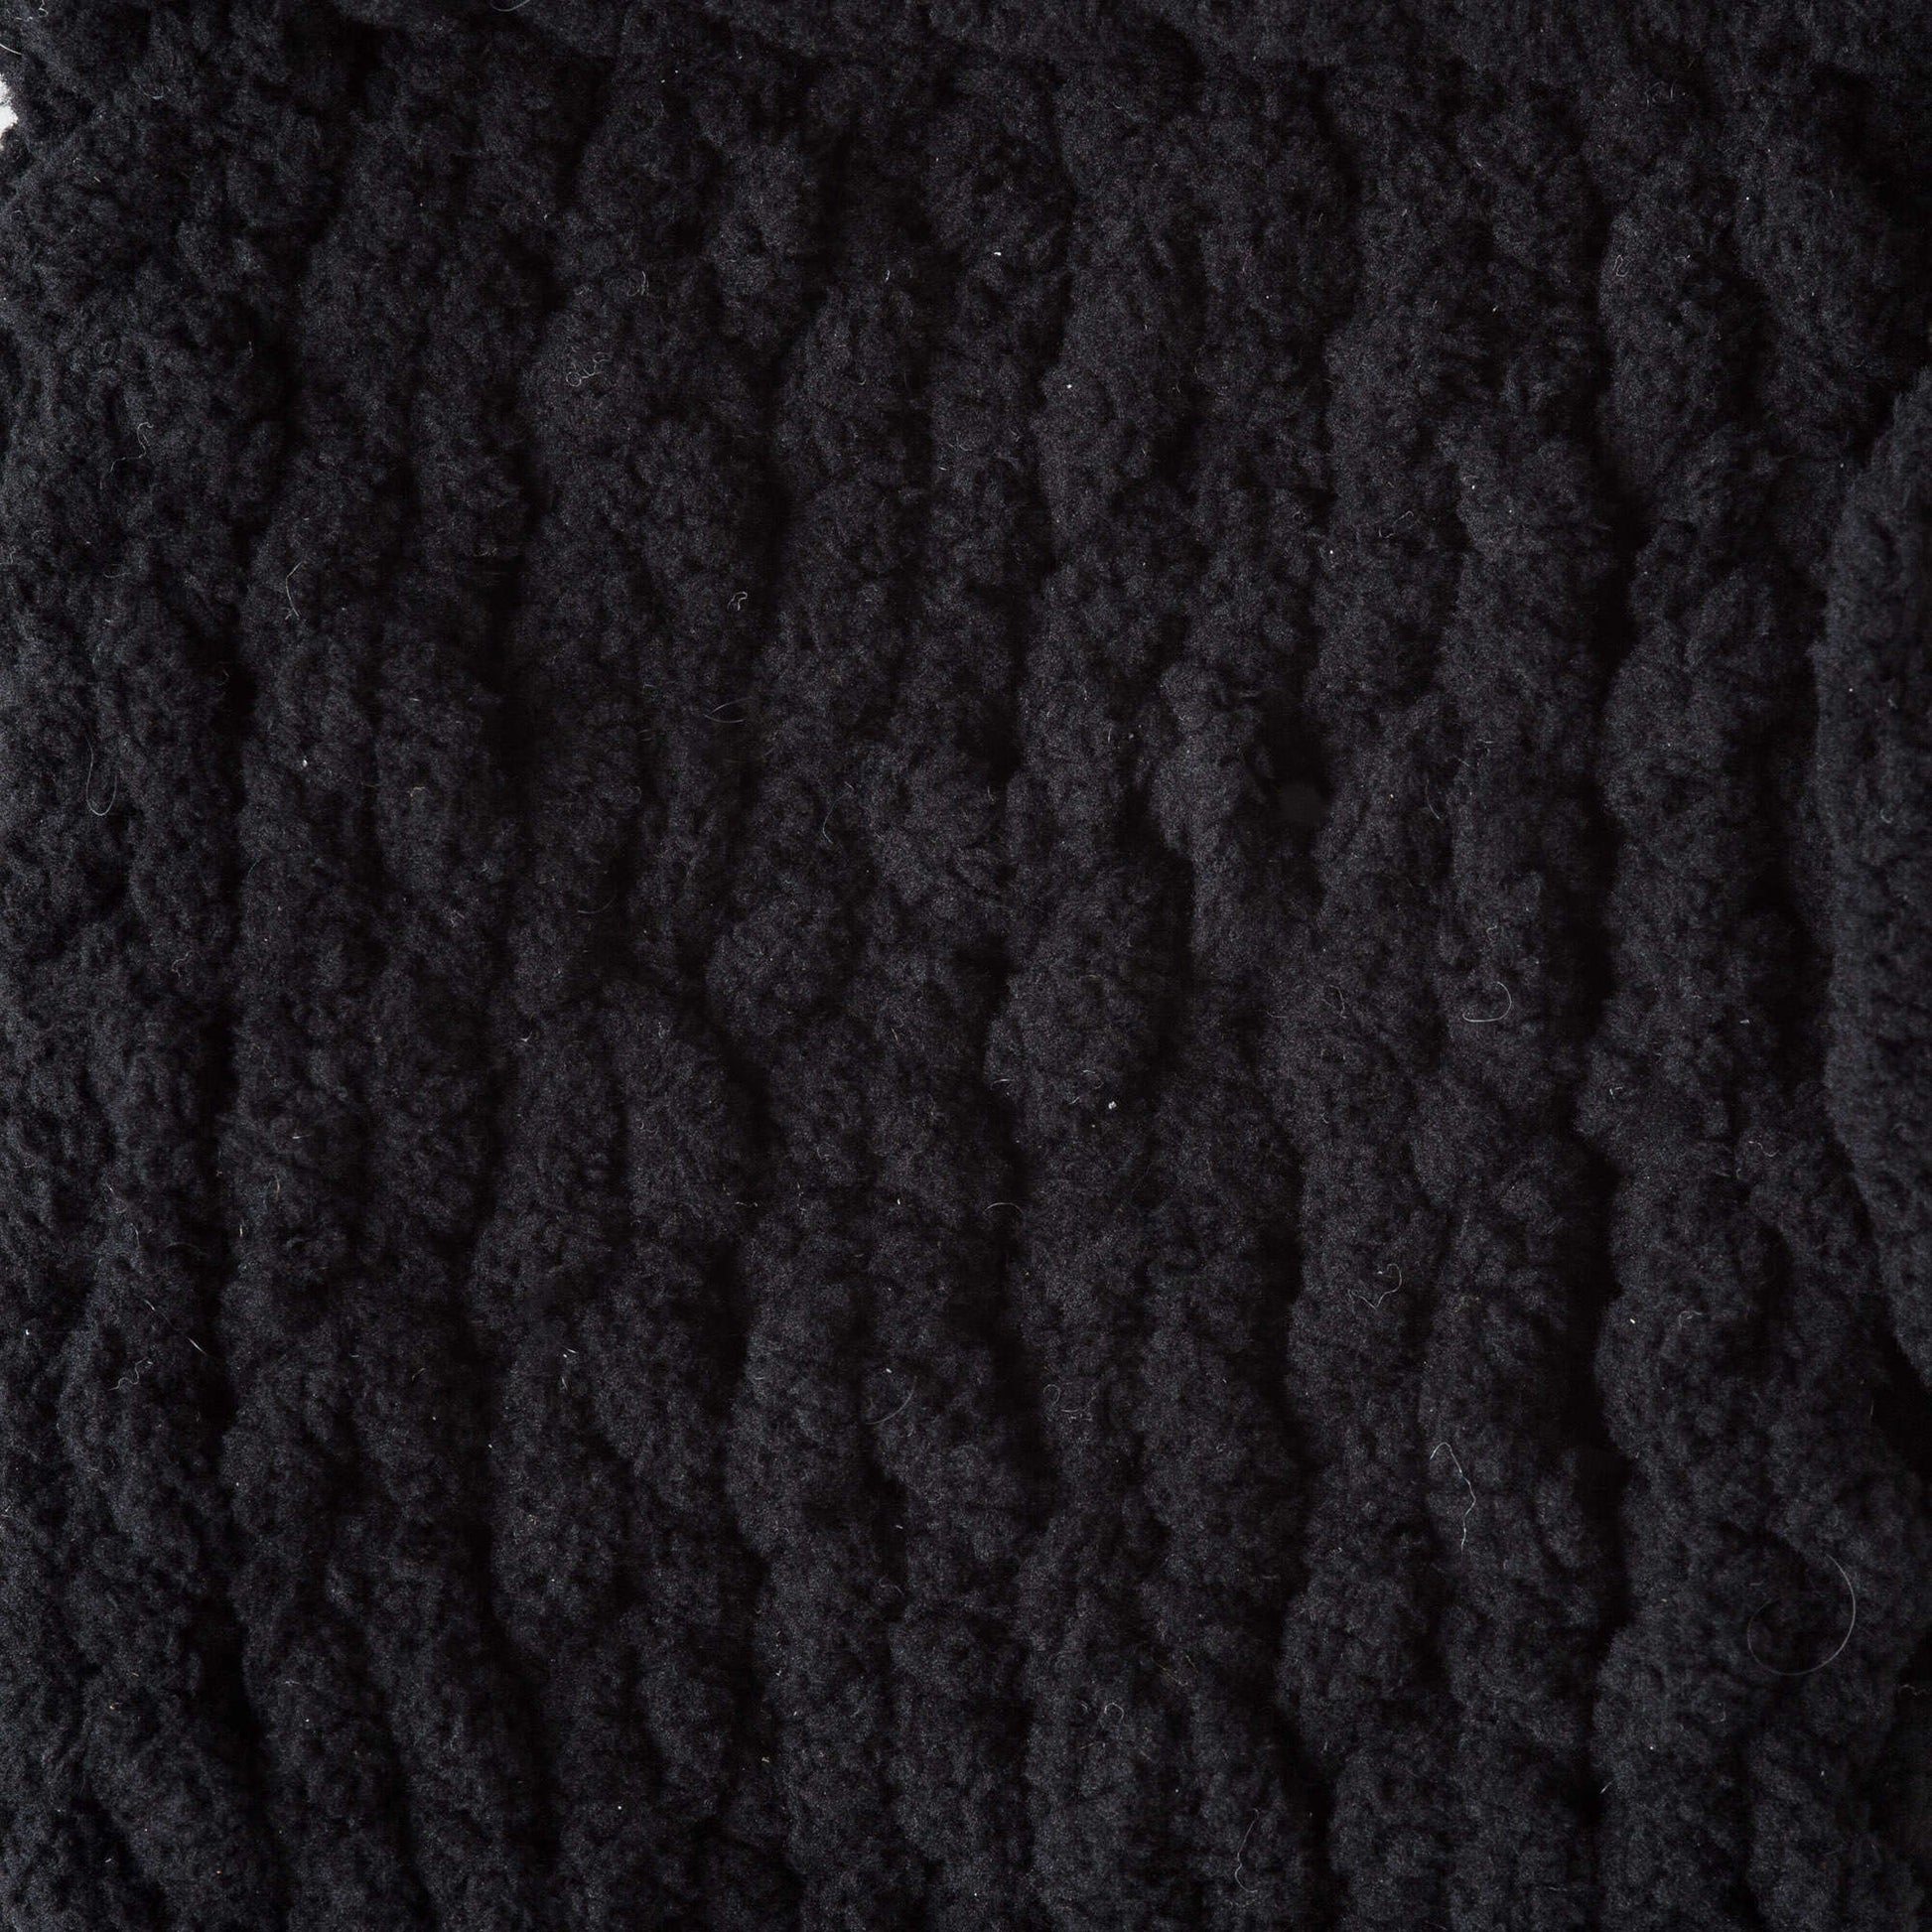 Bernat Blanket Yarn (300g/10.5oz) - Clearance Shades*